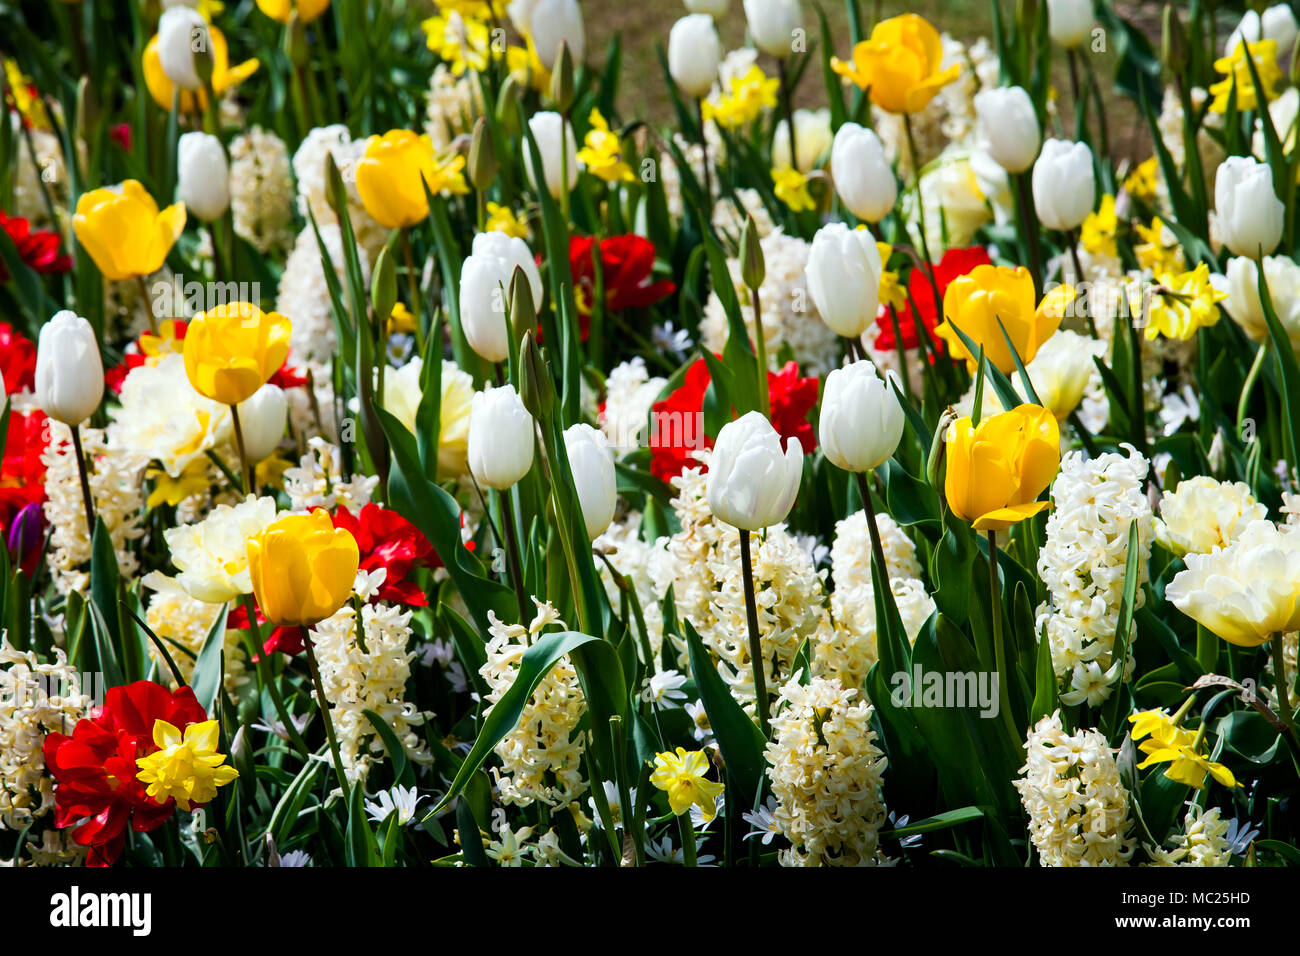 Campo de flores coloridas Fotografía de stock - Alamy